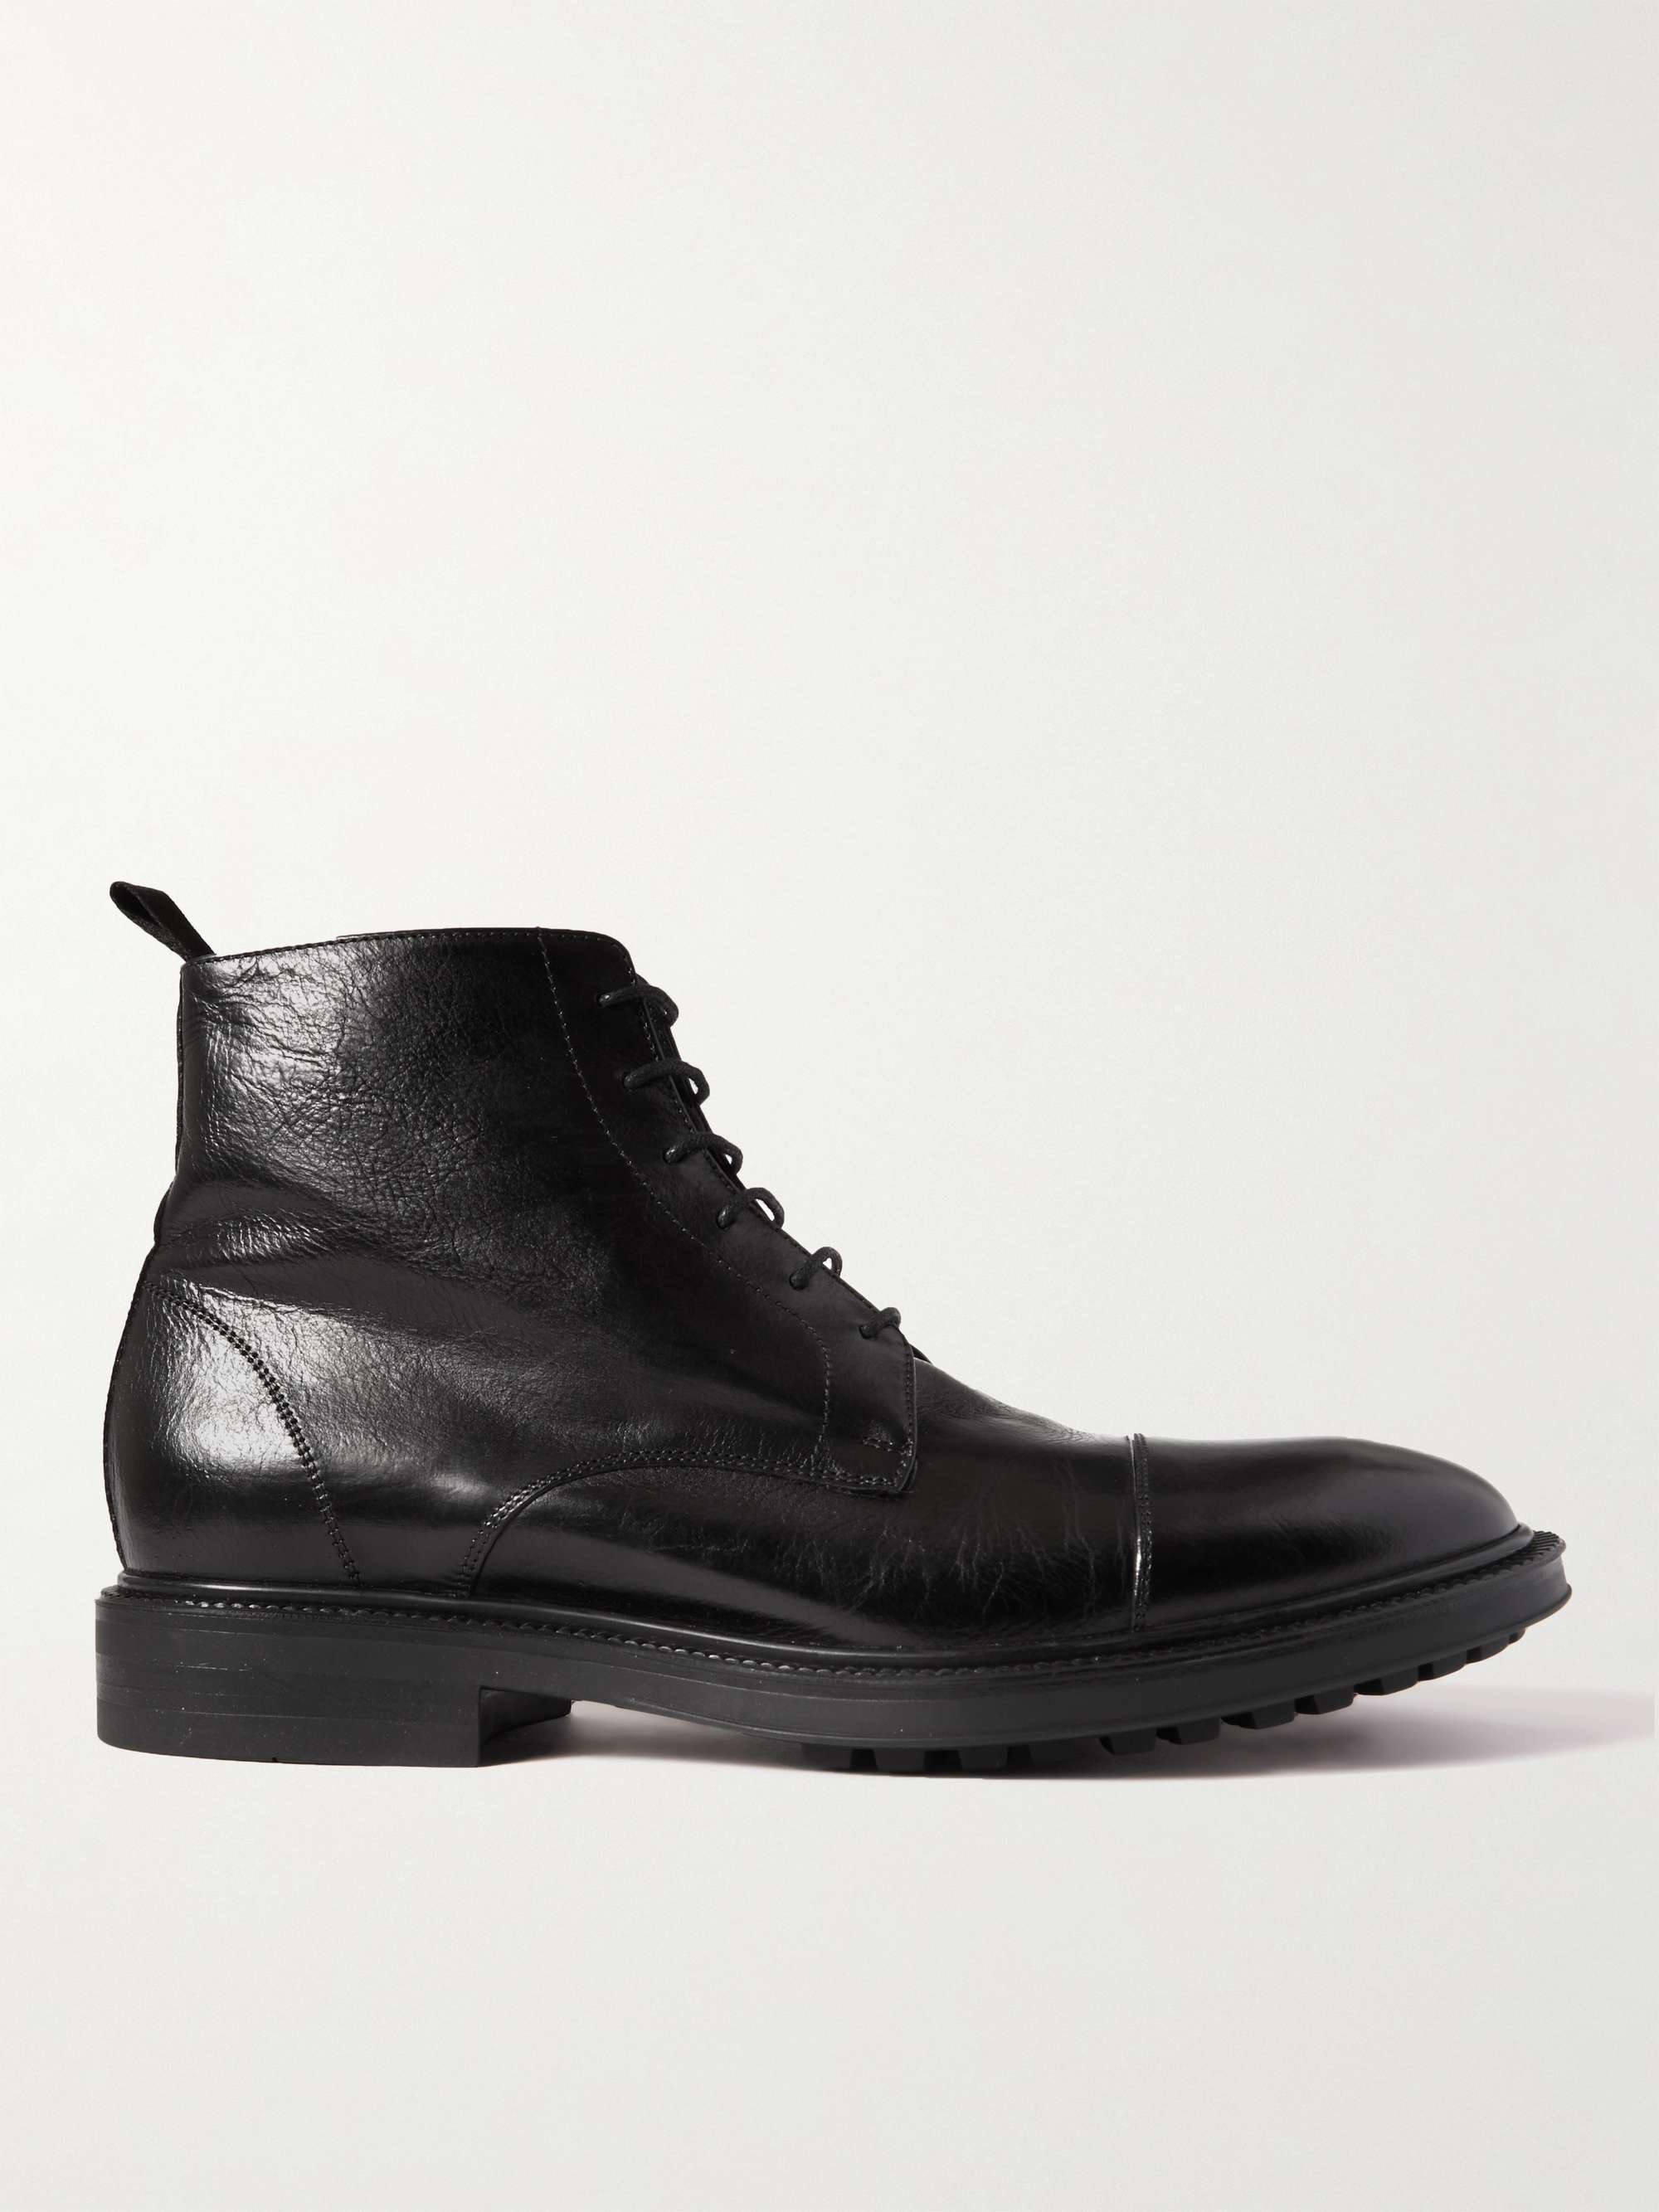 PAUL SMITH Cubitt Leather Boots